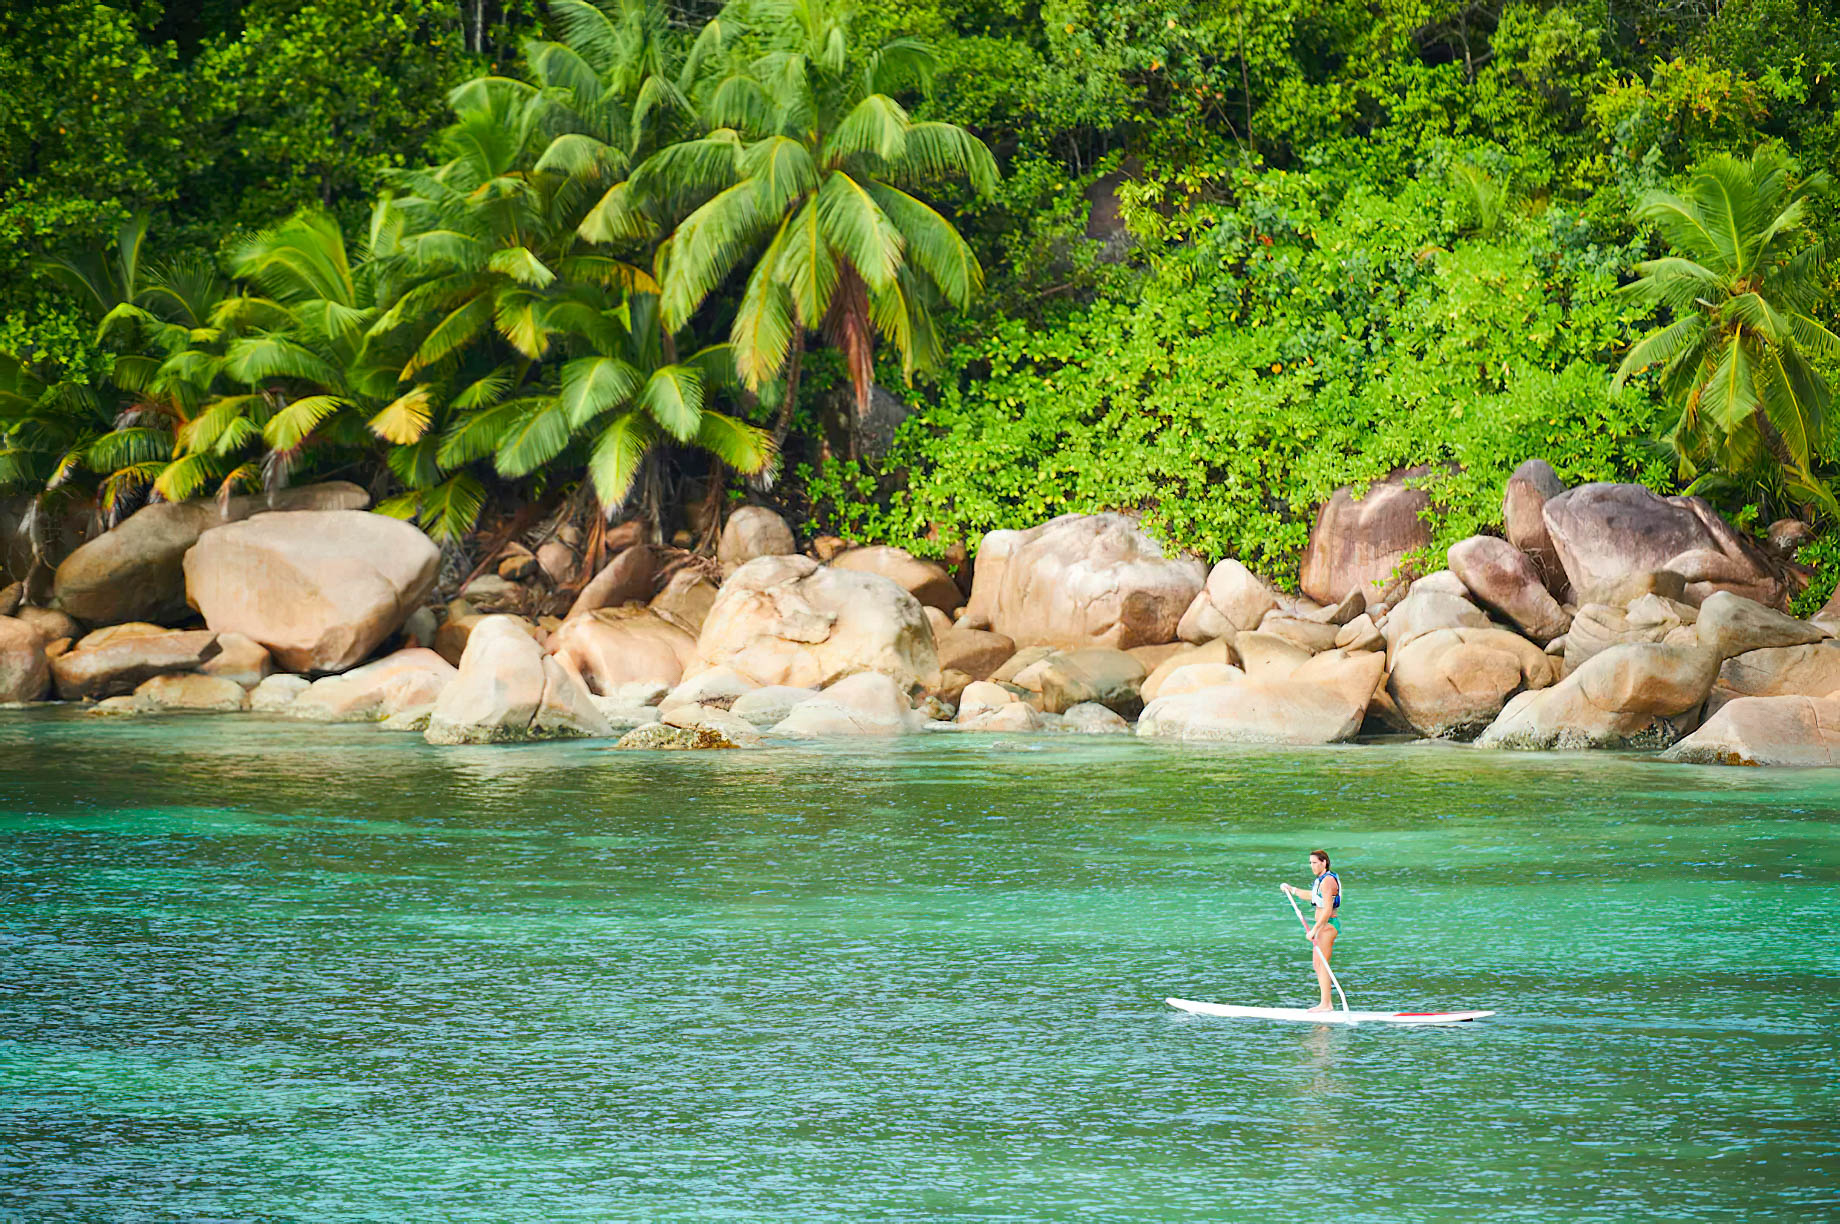 Constance Lemuria Resort – Praslin, Seychelles – Paddleboarding